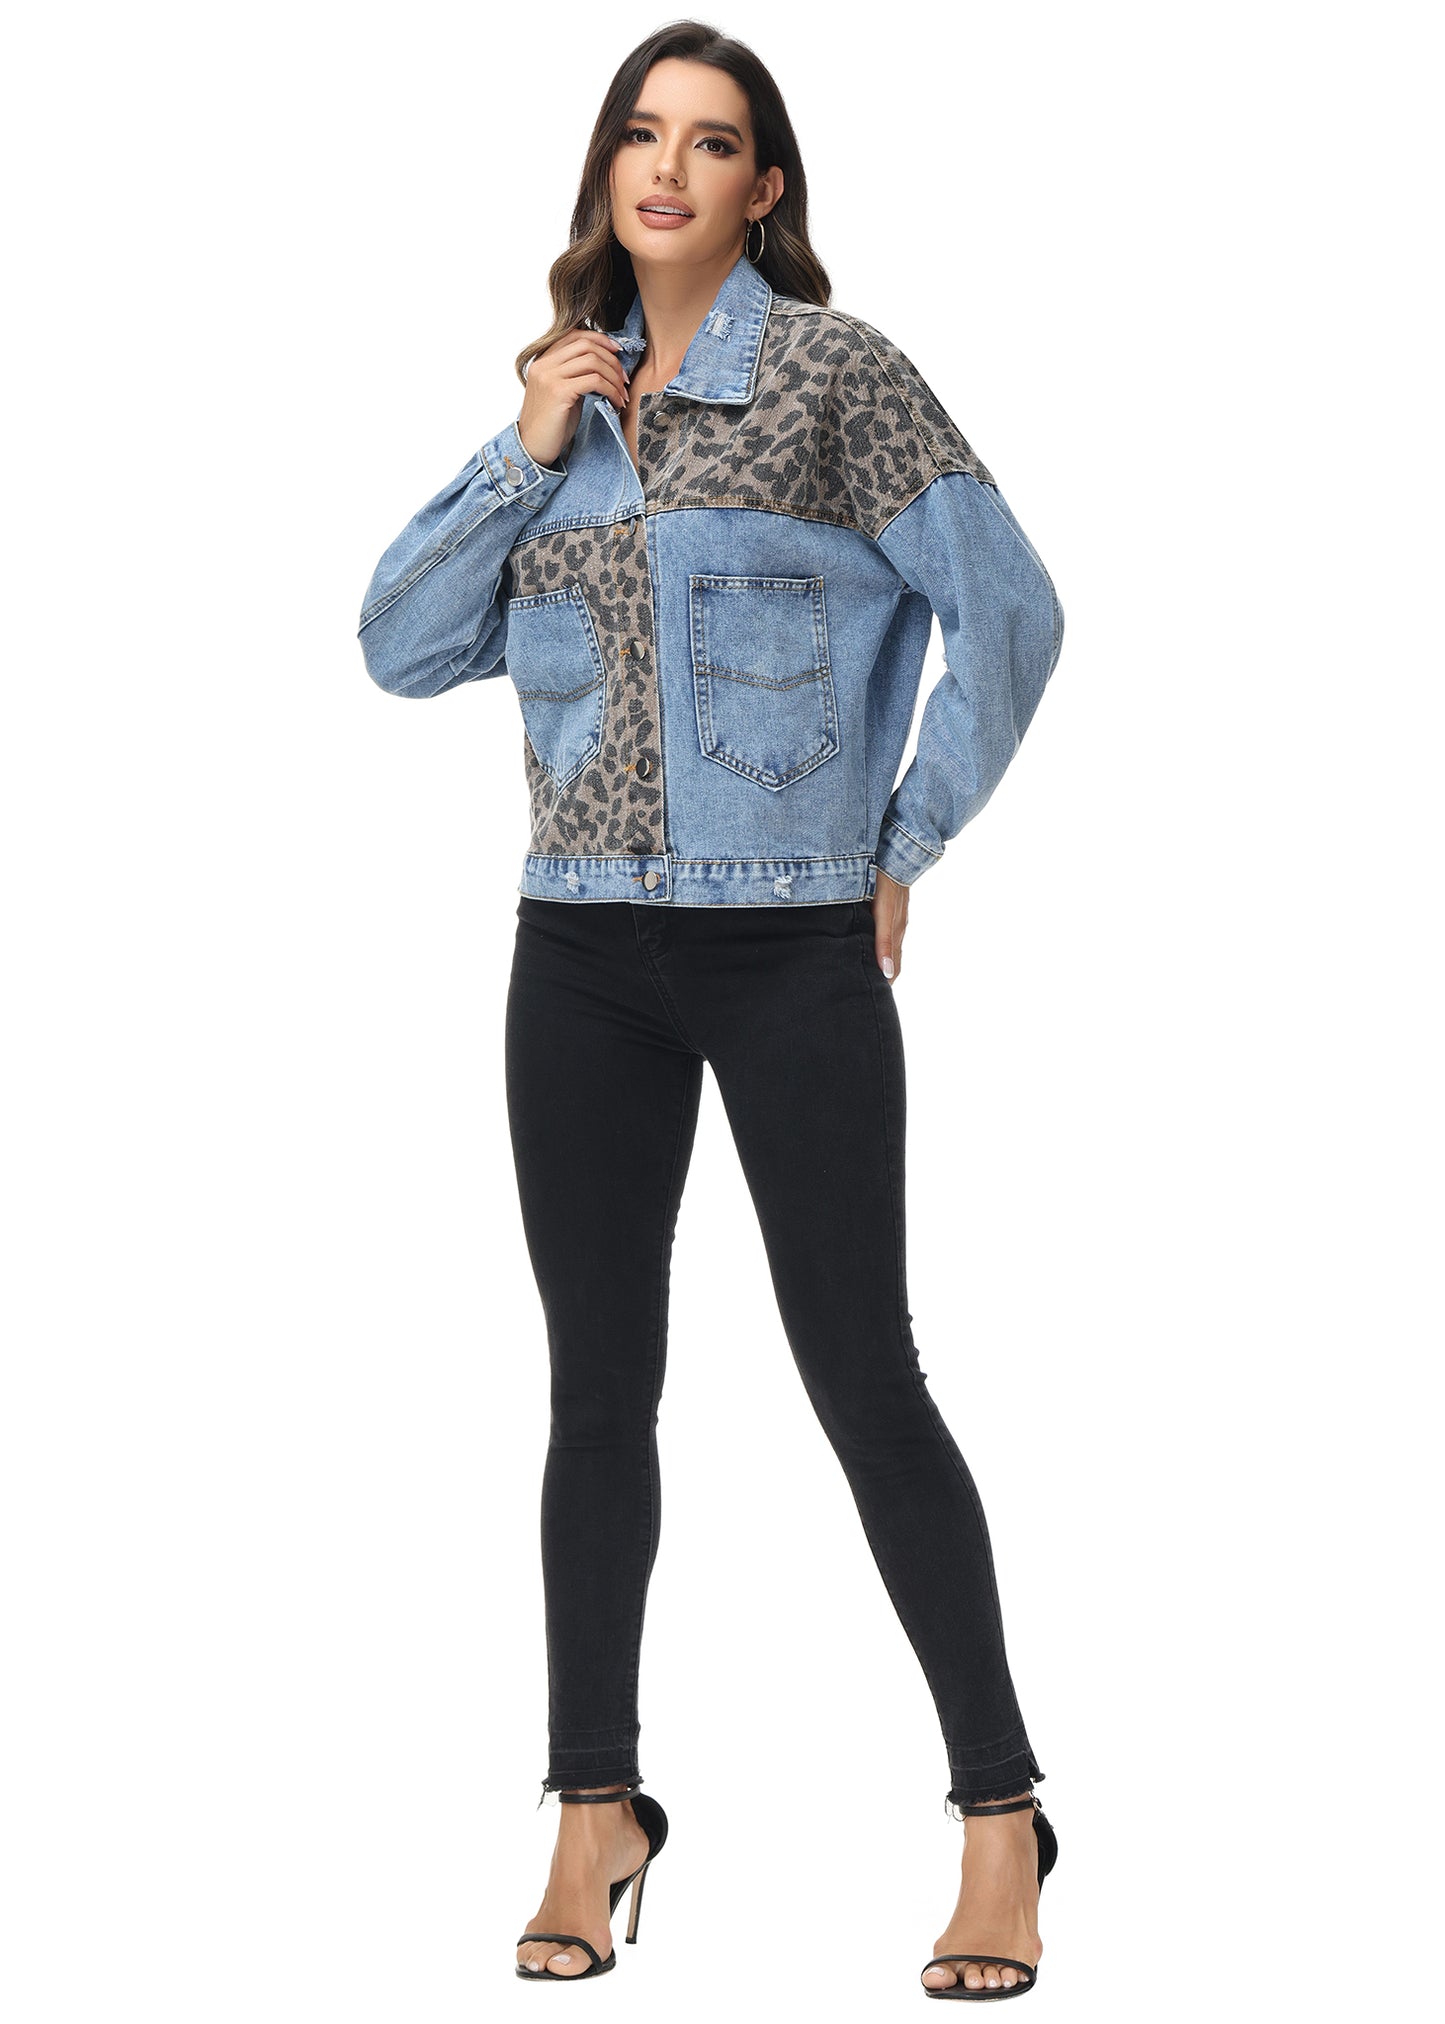 Anna-Kaci Women Long Sleeve Leopard Print Colorblock Denim Jacket Distressed Boyfriend Outerwear, Black, Large